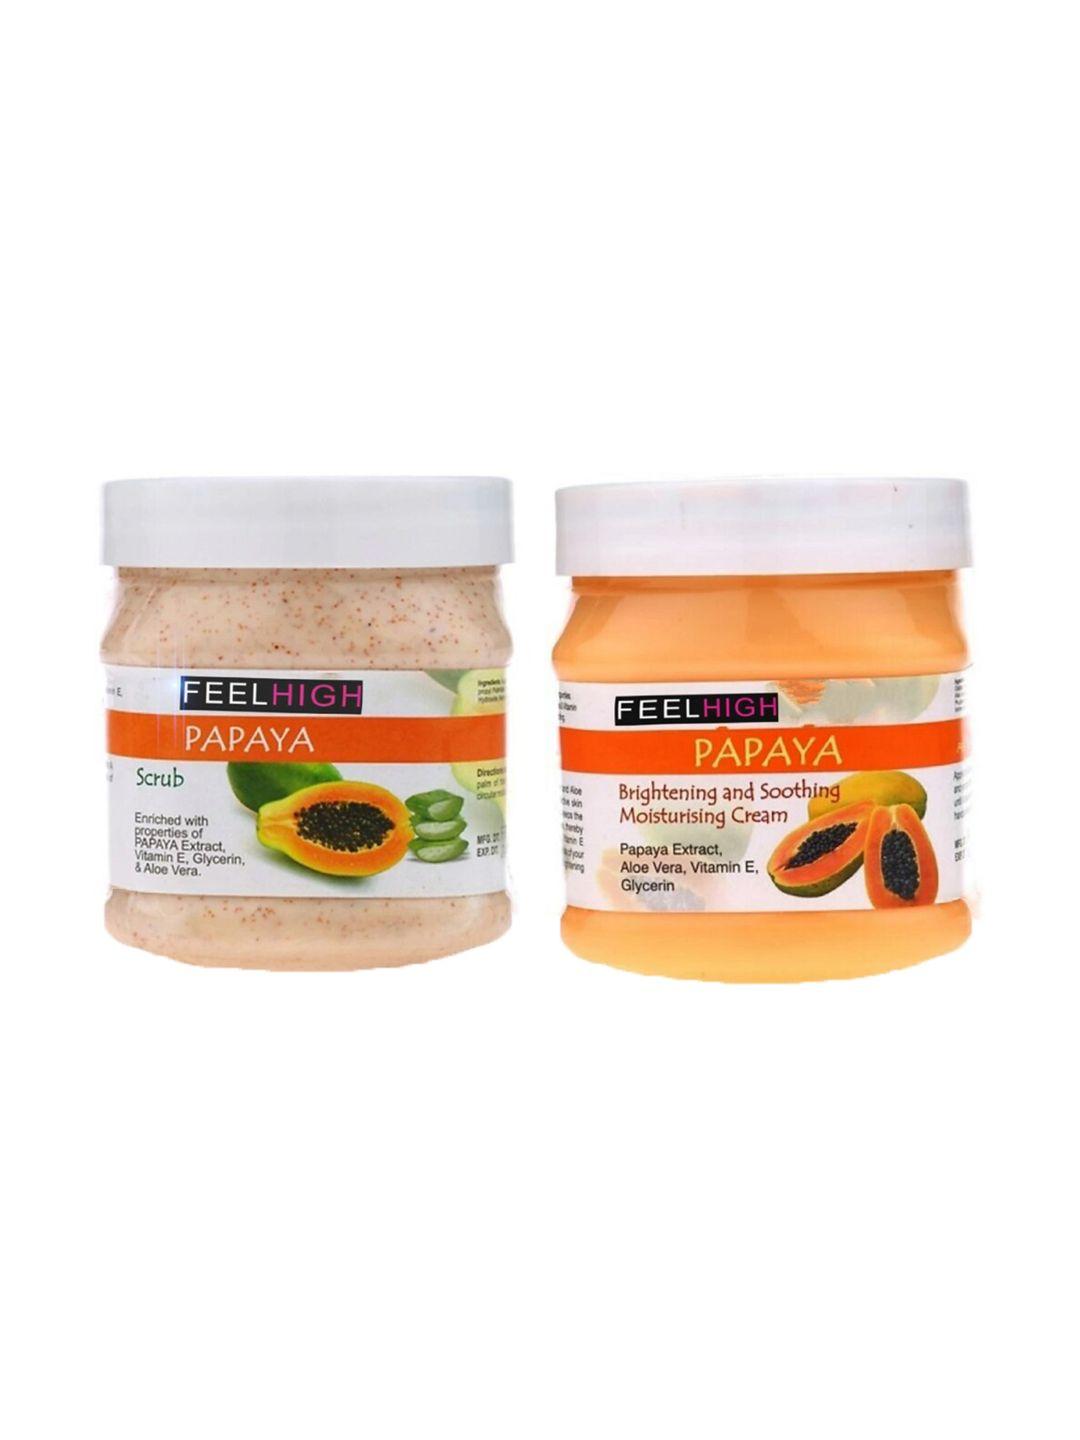 feelhigh set of 2 papaya scrub & cream facial kit 500ml each